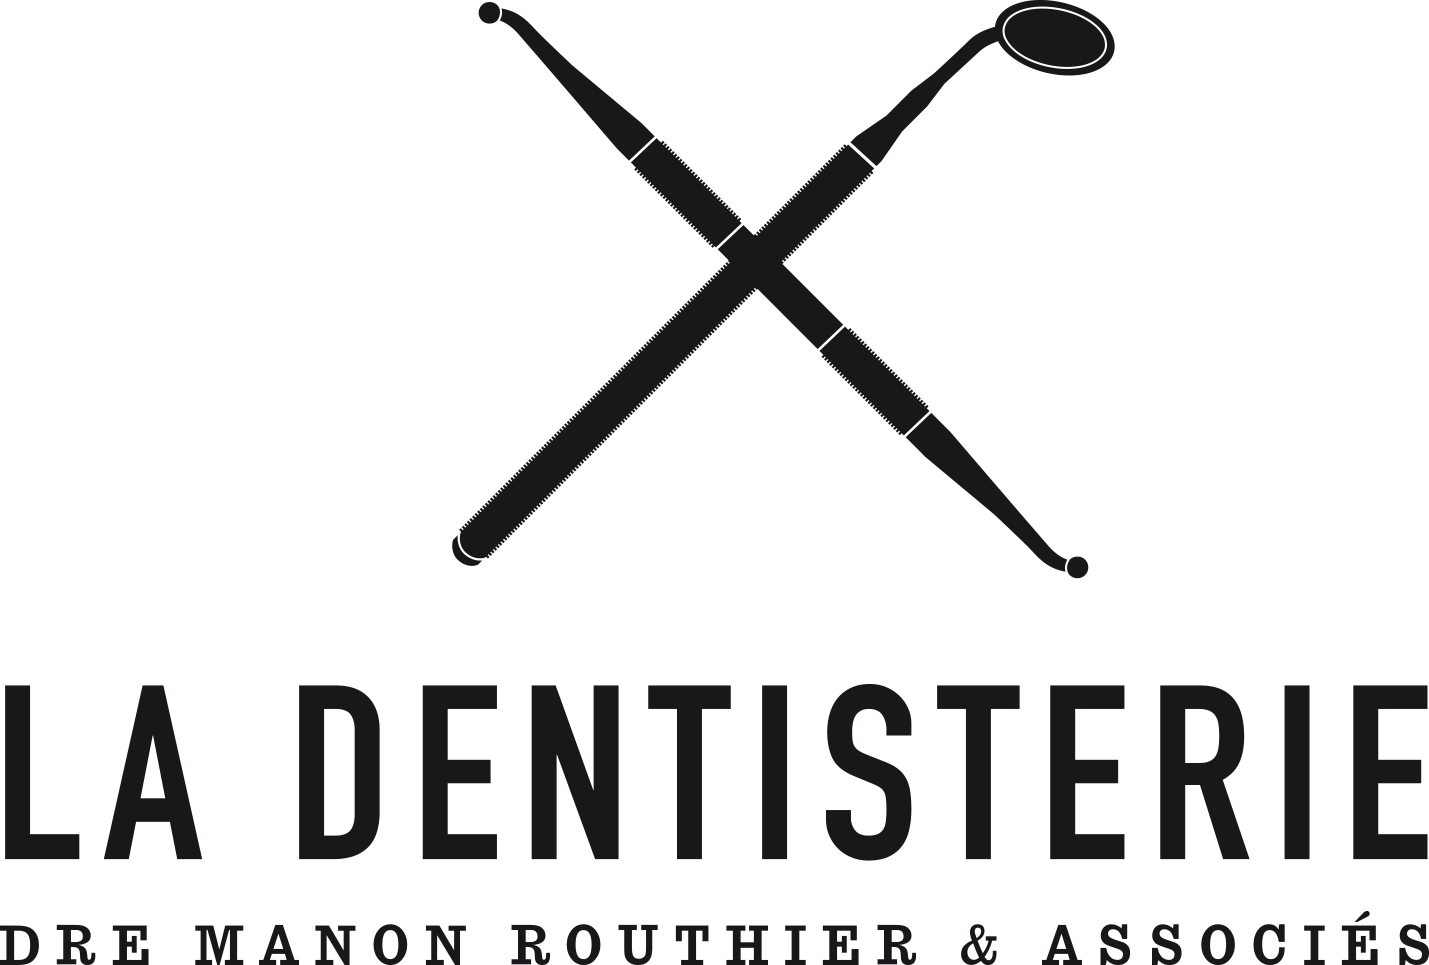 #ladentisterie #dentisteriemirabel #dentistemirabel #manonrouthier